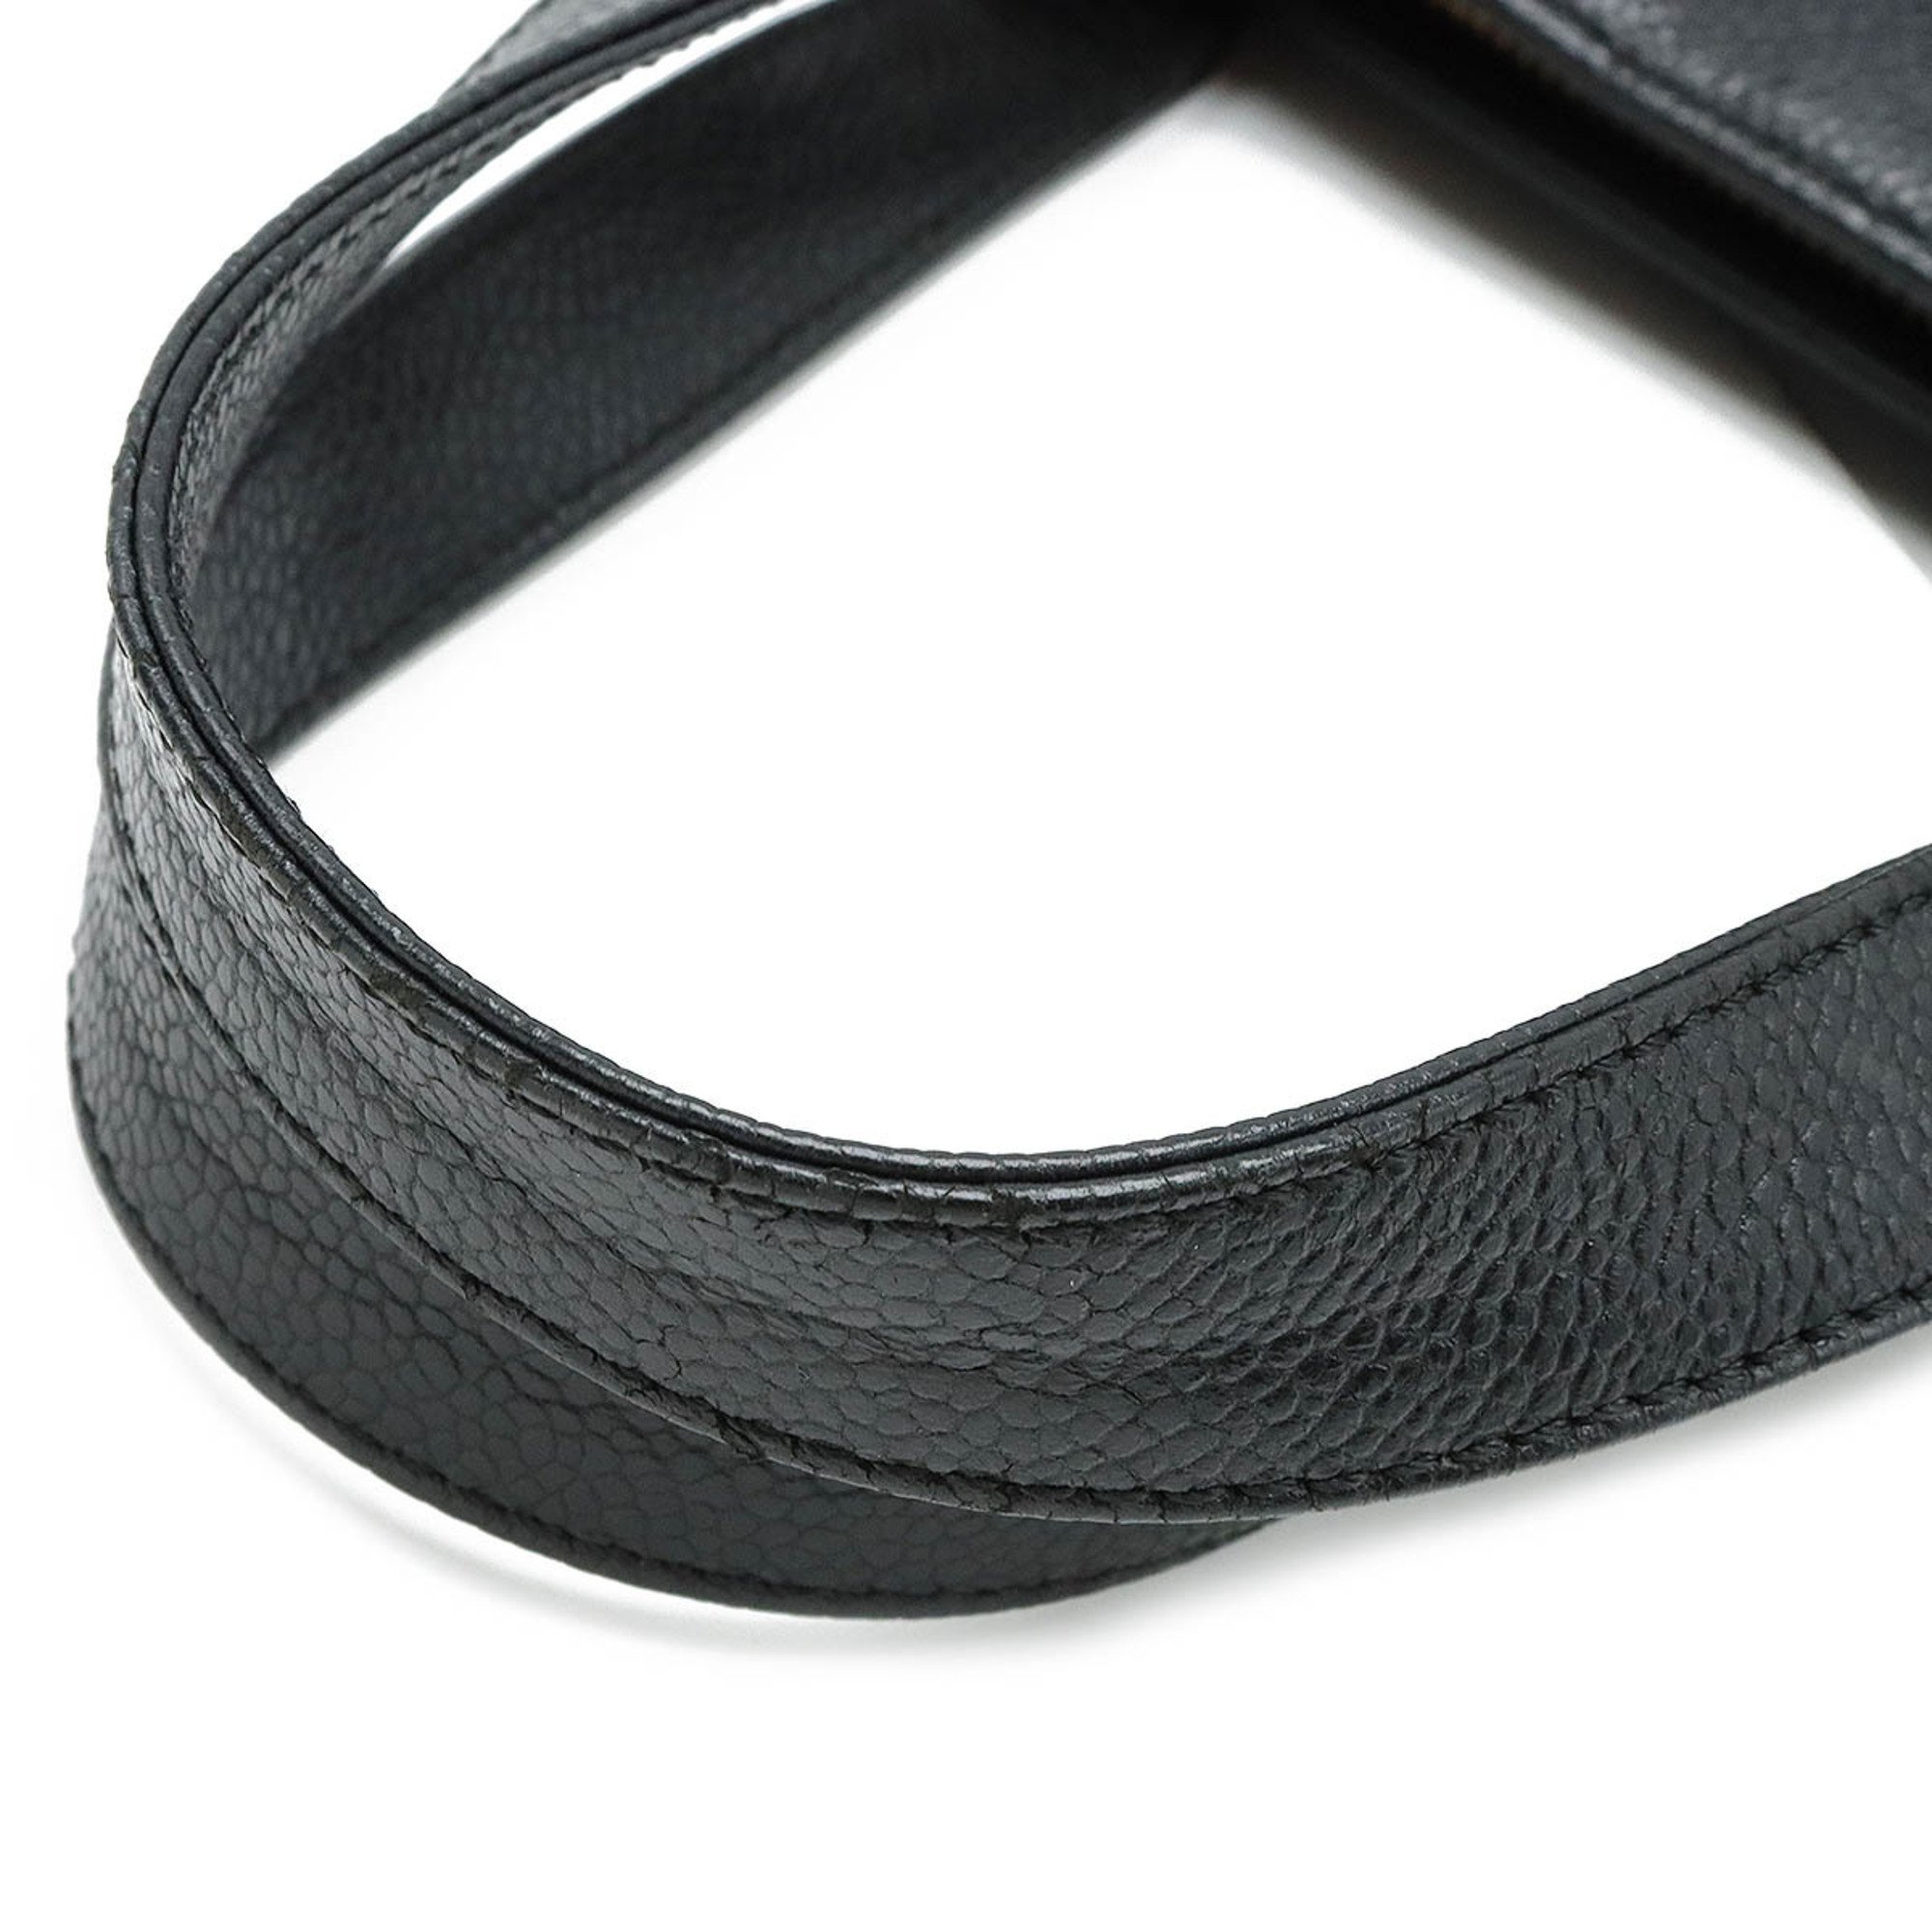 CHANEL Chanel tote bag handbag caviar skin leather black